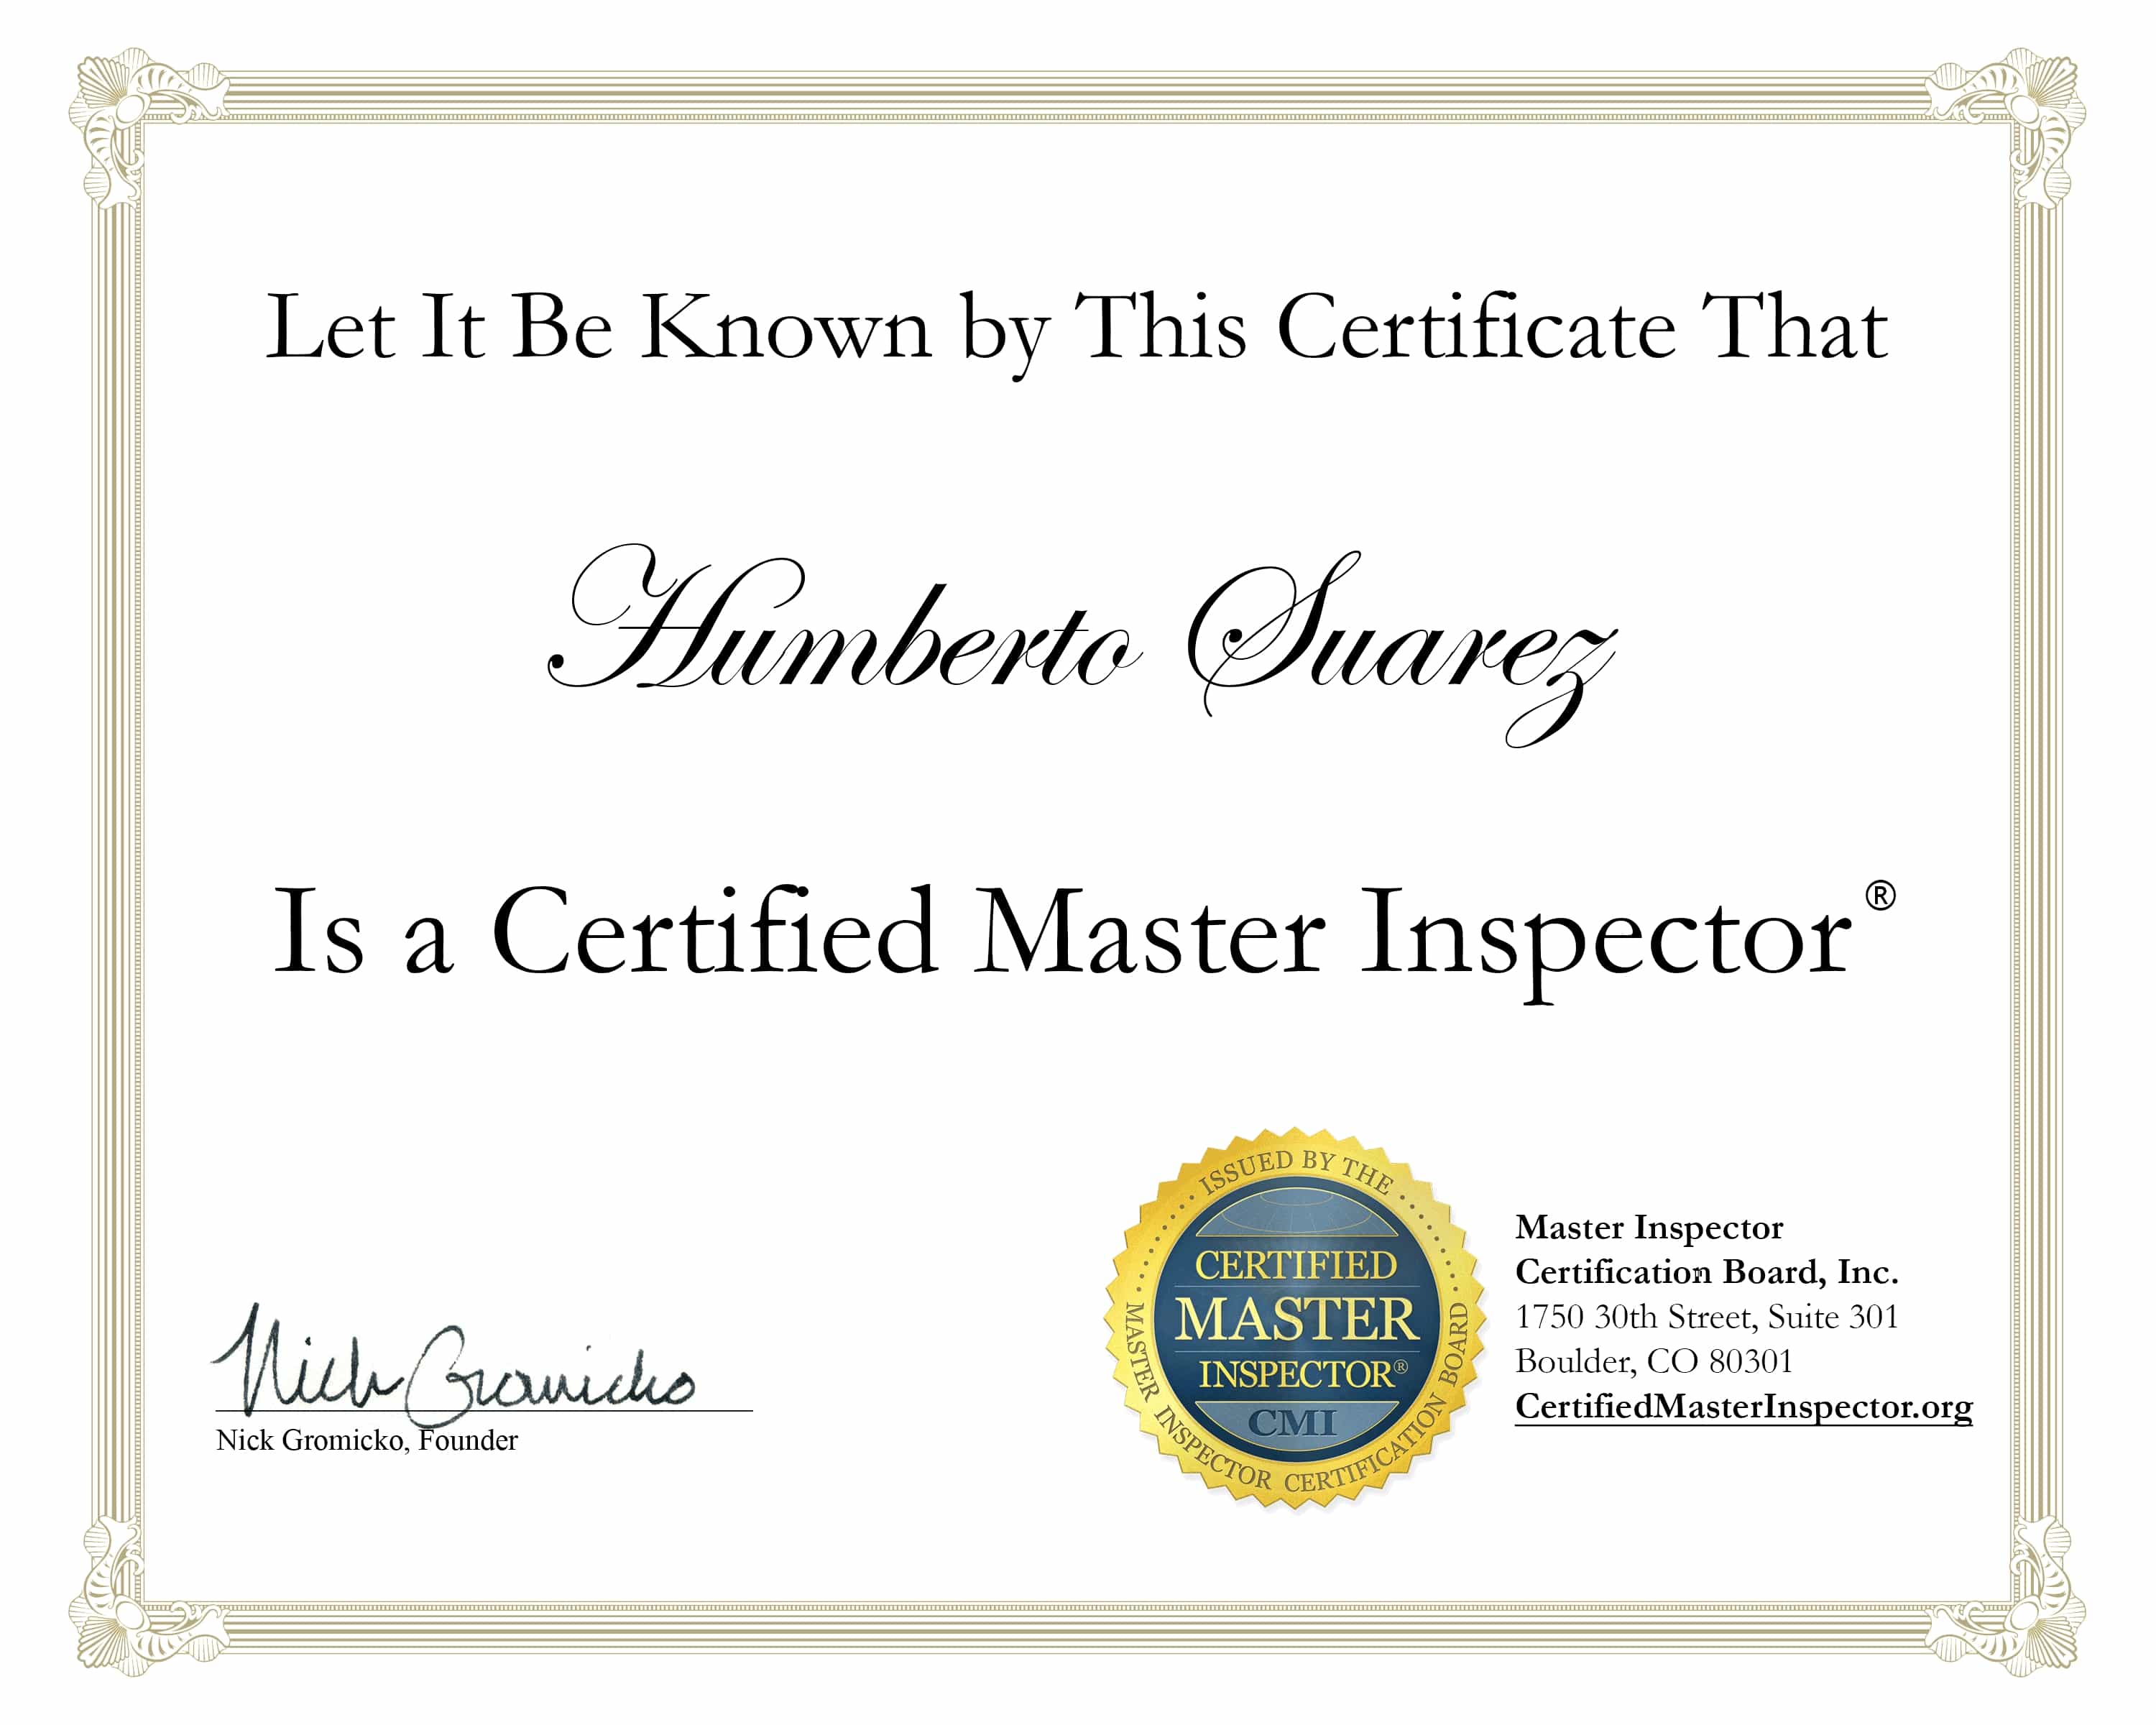 Certified Master Inspector Certificate